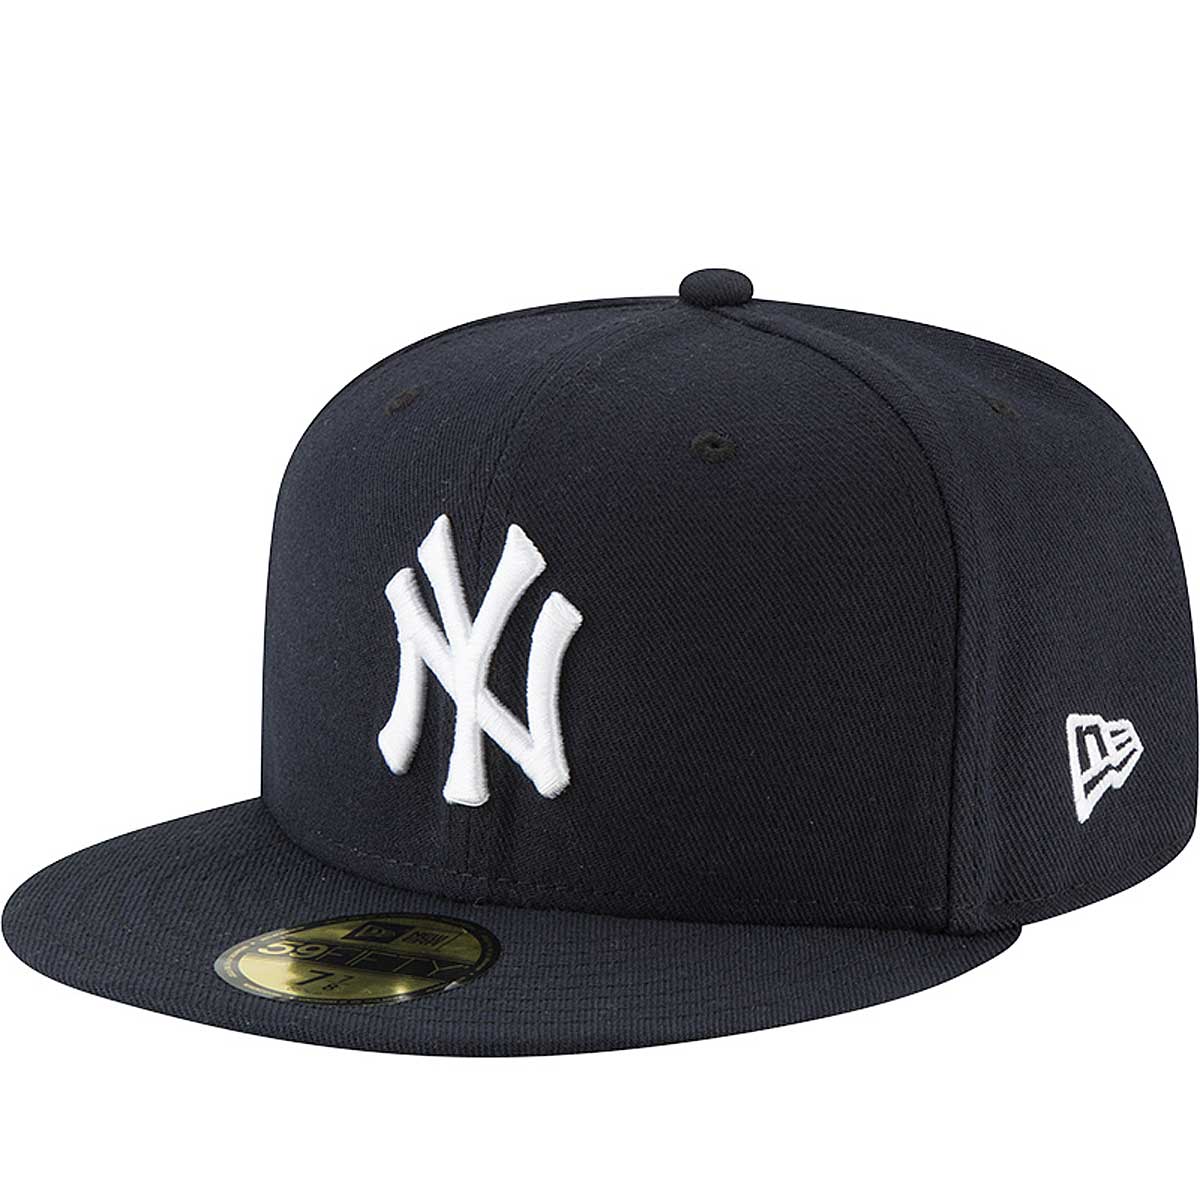 🧢 Achète la casquette MLB 5950 AC Perf NY Yankees | KICKZ